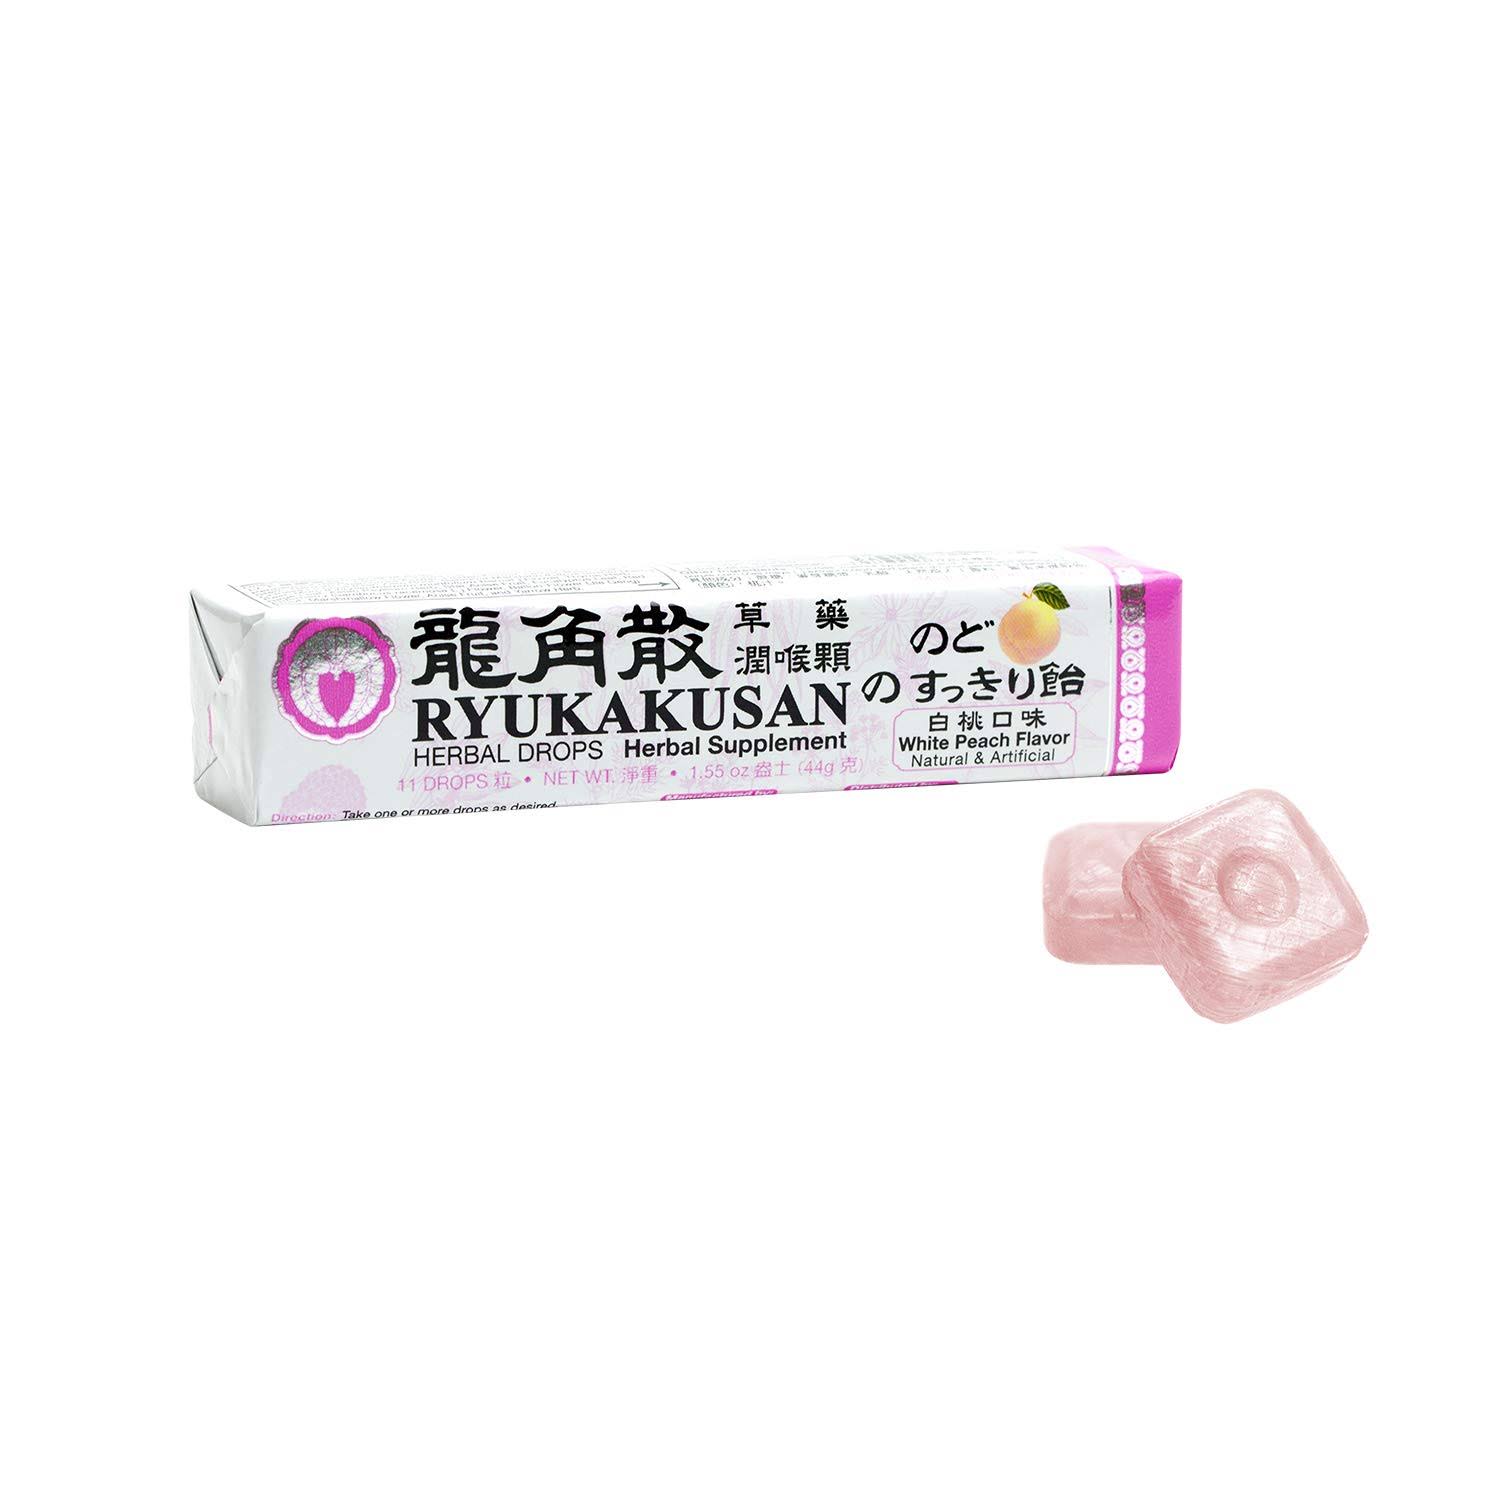 Ryukakusan Herbal Drops - 11 Drops by Solstice-White Peach Flavour